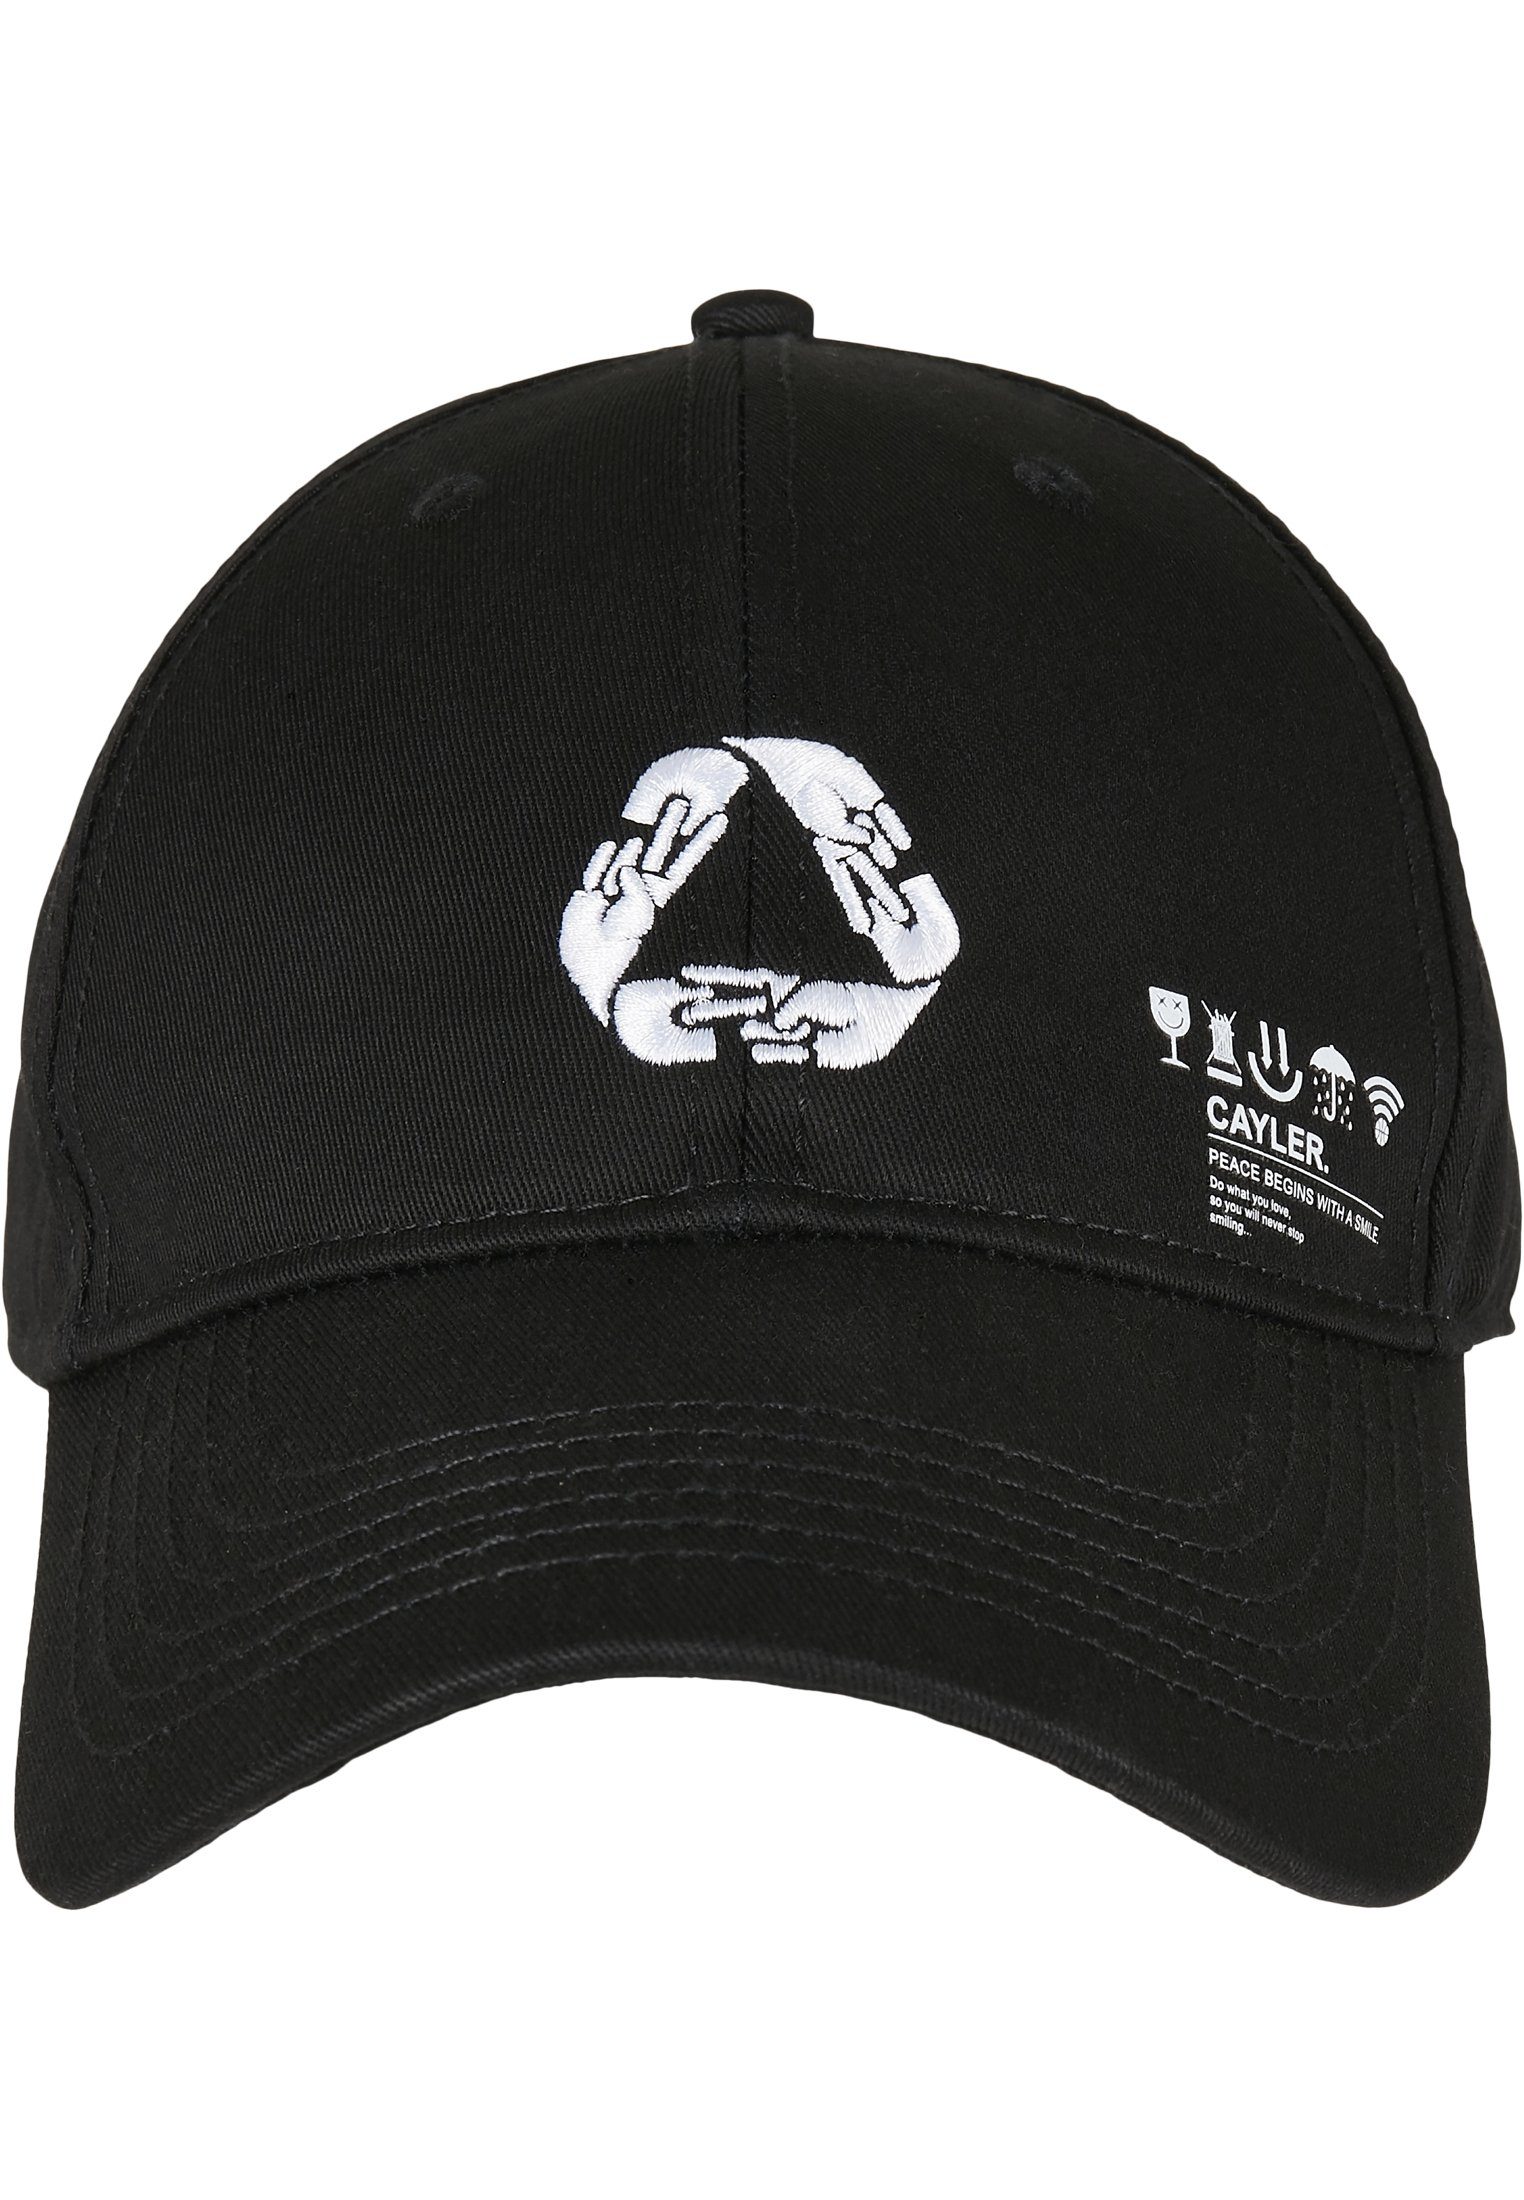 CAYLER & SONS Flex C&S black/white Iconic Cap Curved Cap Peace